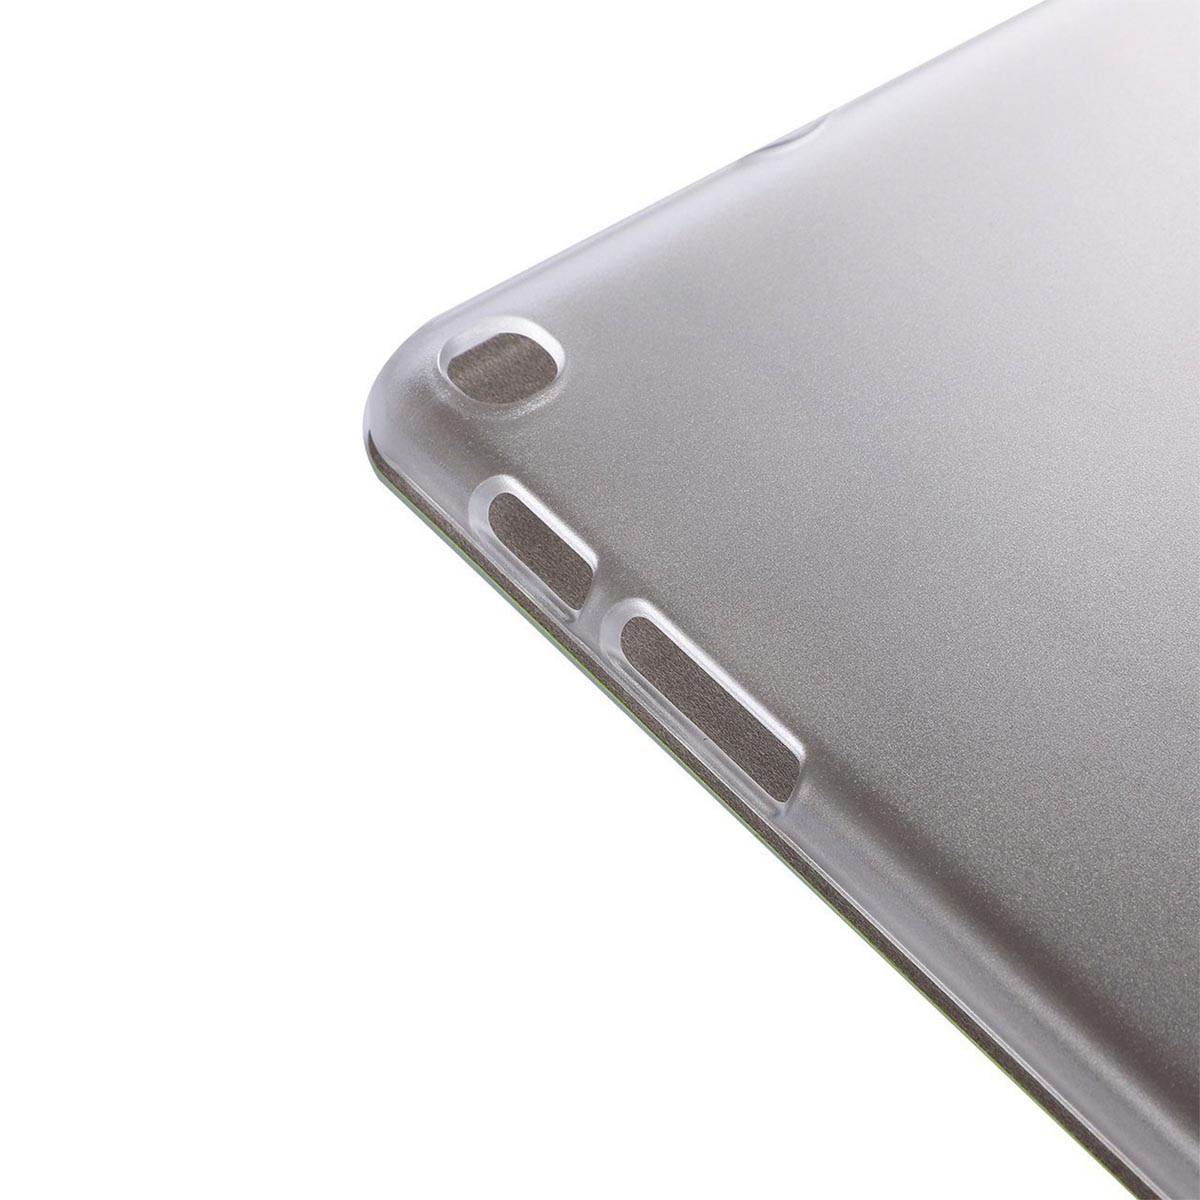 Чехол Smart Case для планшета SAMSUNG Galaxy Tab A 8.0 2019 (SM-T290, SM-T295), цвет синий